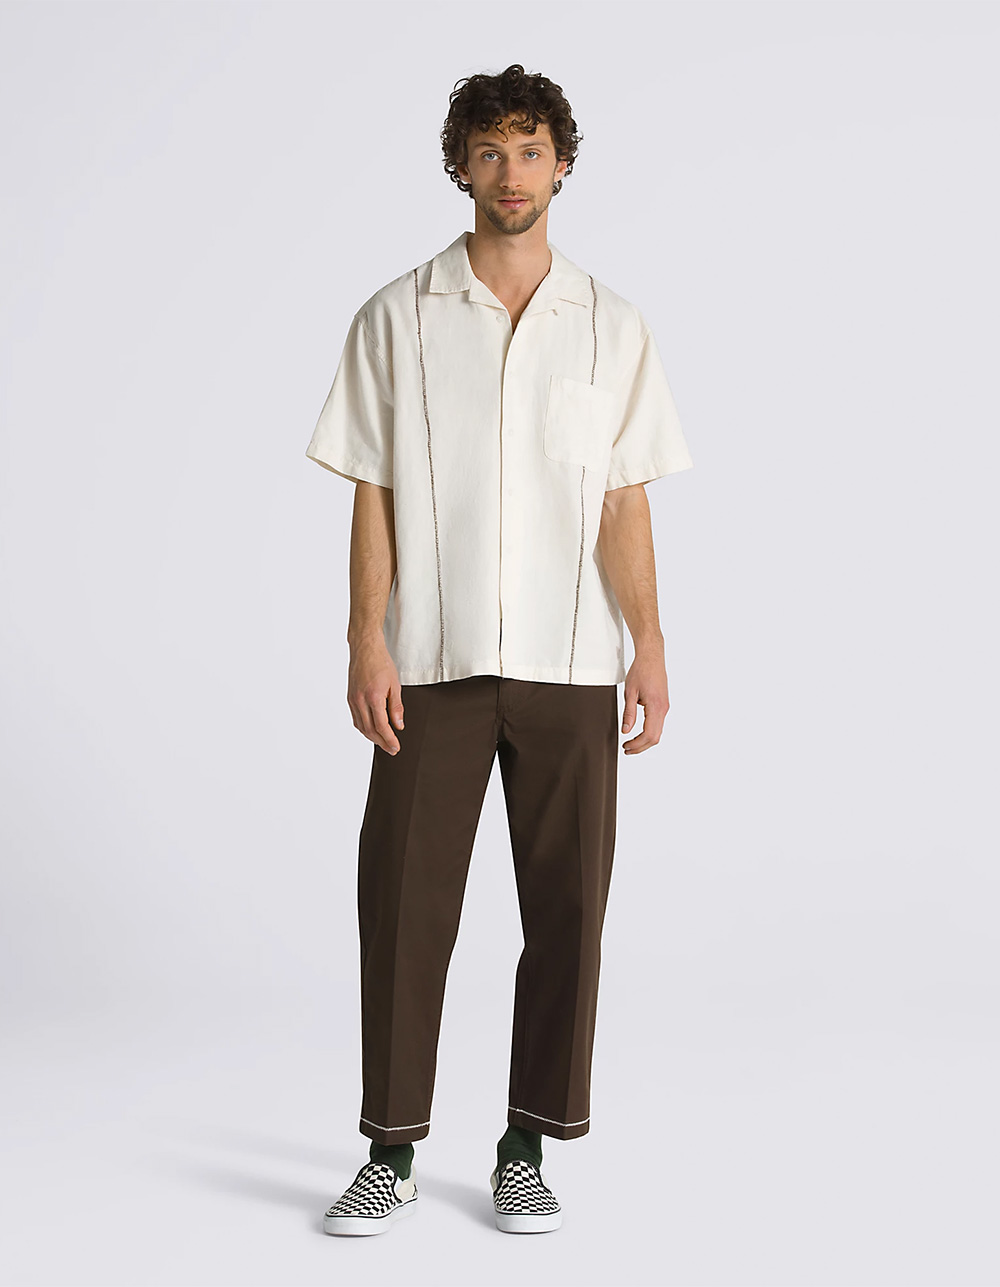 VANS Mikey February Mens Button Up Shirt - ANTIQUE WHITE | Tillys